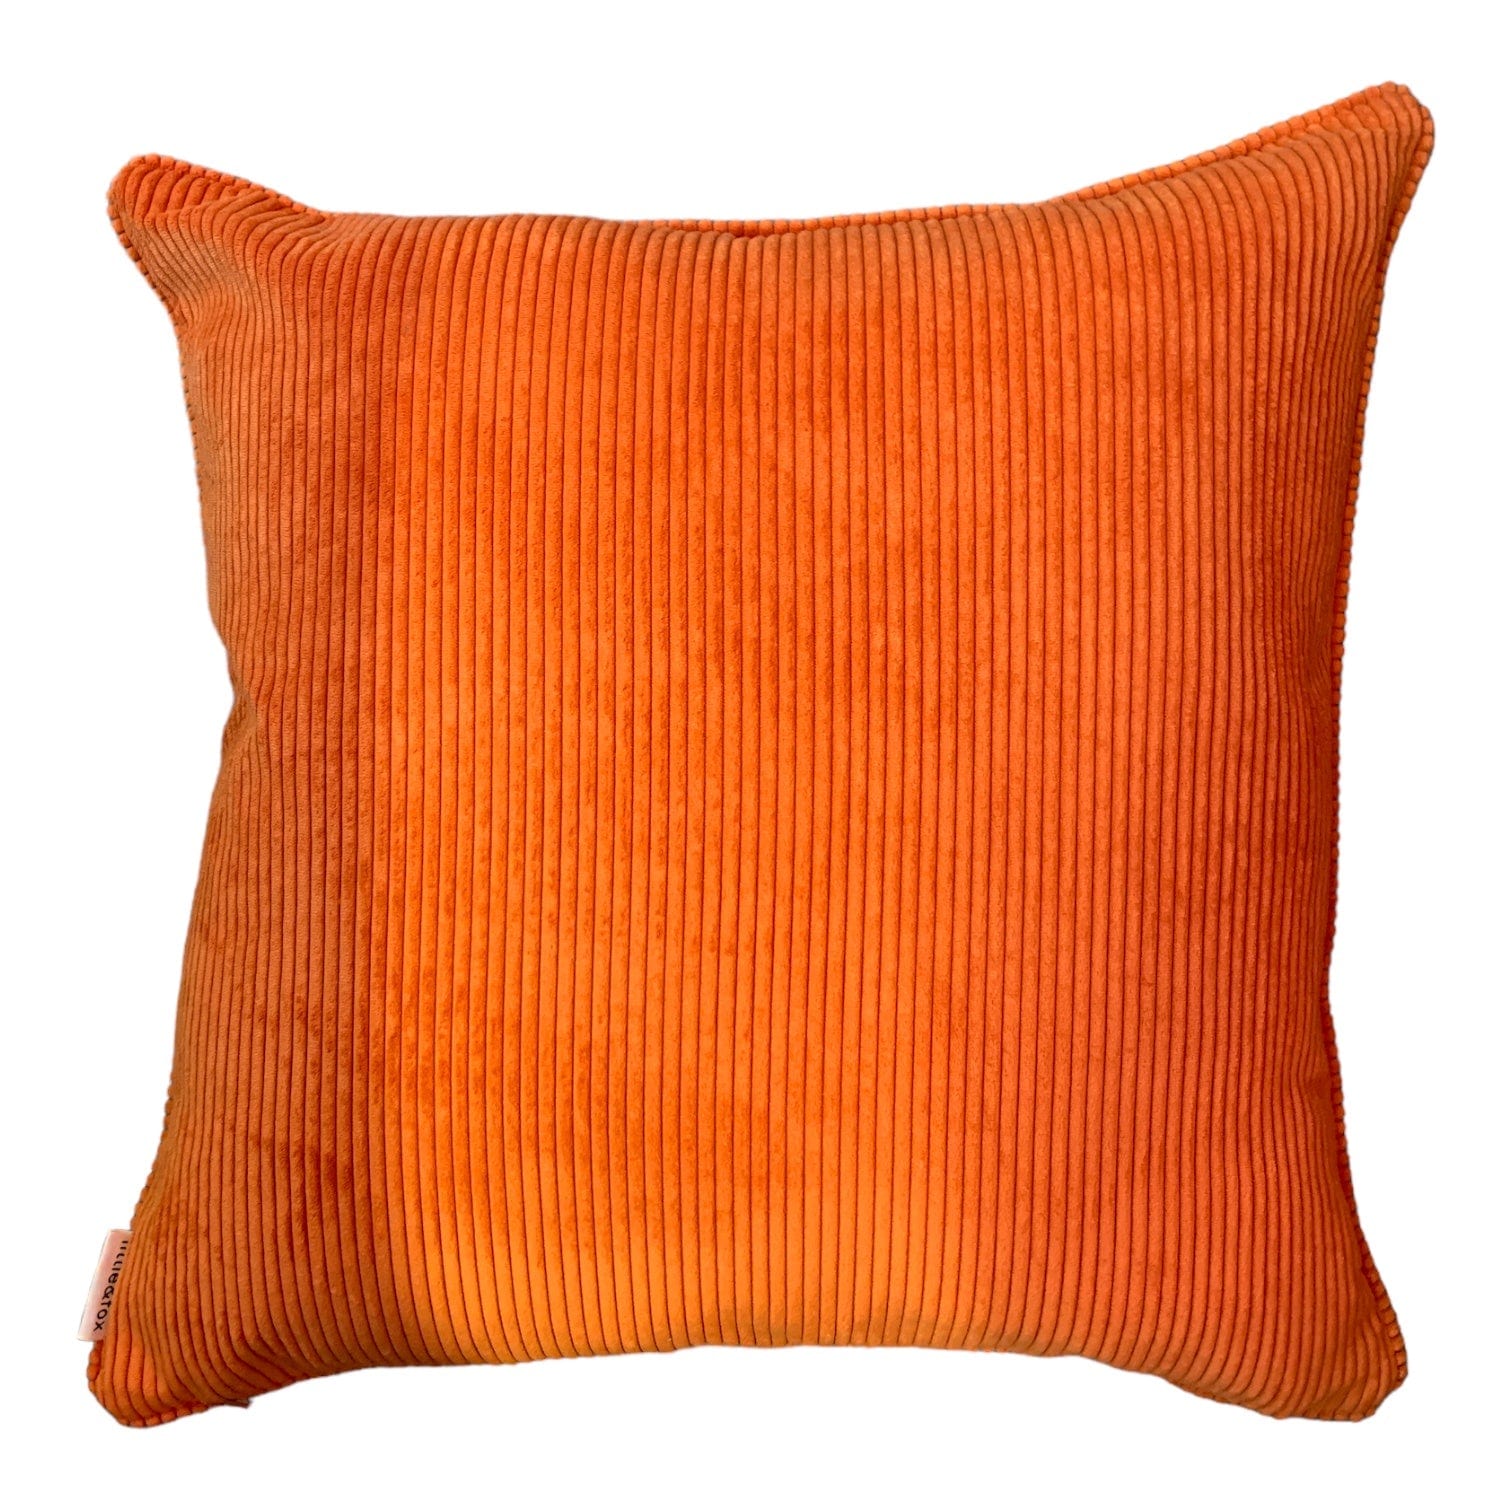 Darven Tangerine Pipped  55x55cm cushion little and fox.jpg